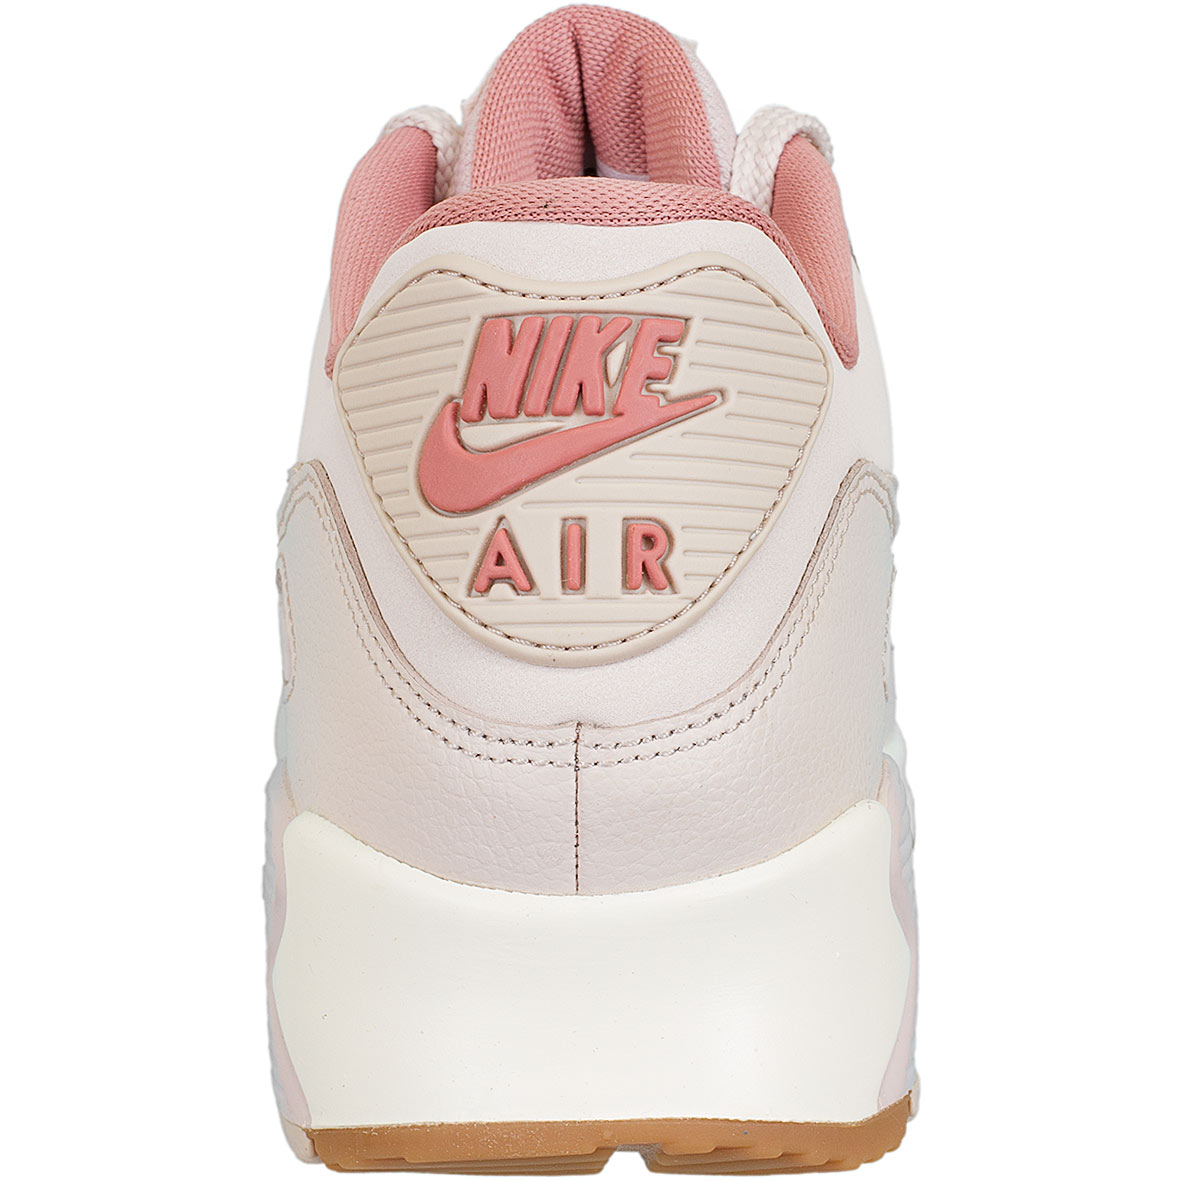 ☆ Nike Damen Sneaker Air Max 90 Leather silt red - hier bestellen!